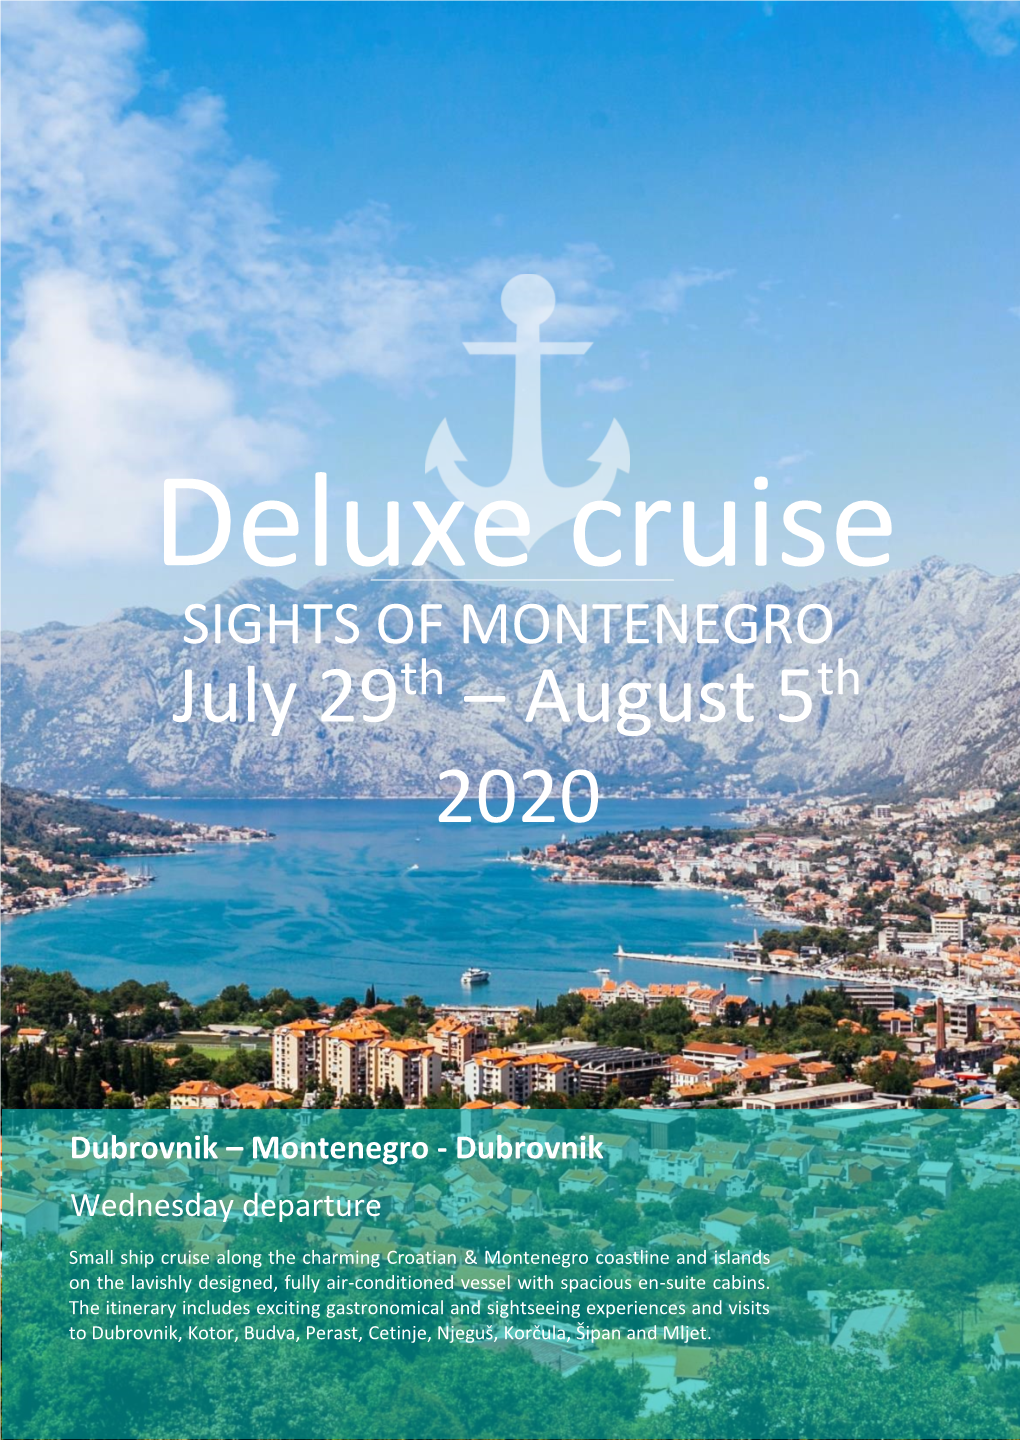 Dubrovnik – Montenegro - Dubrovnik